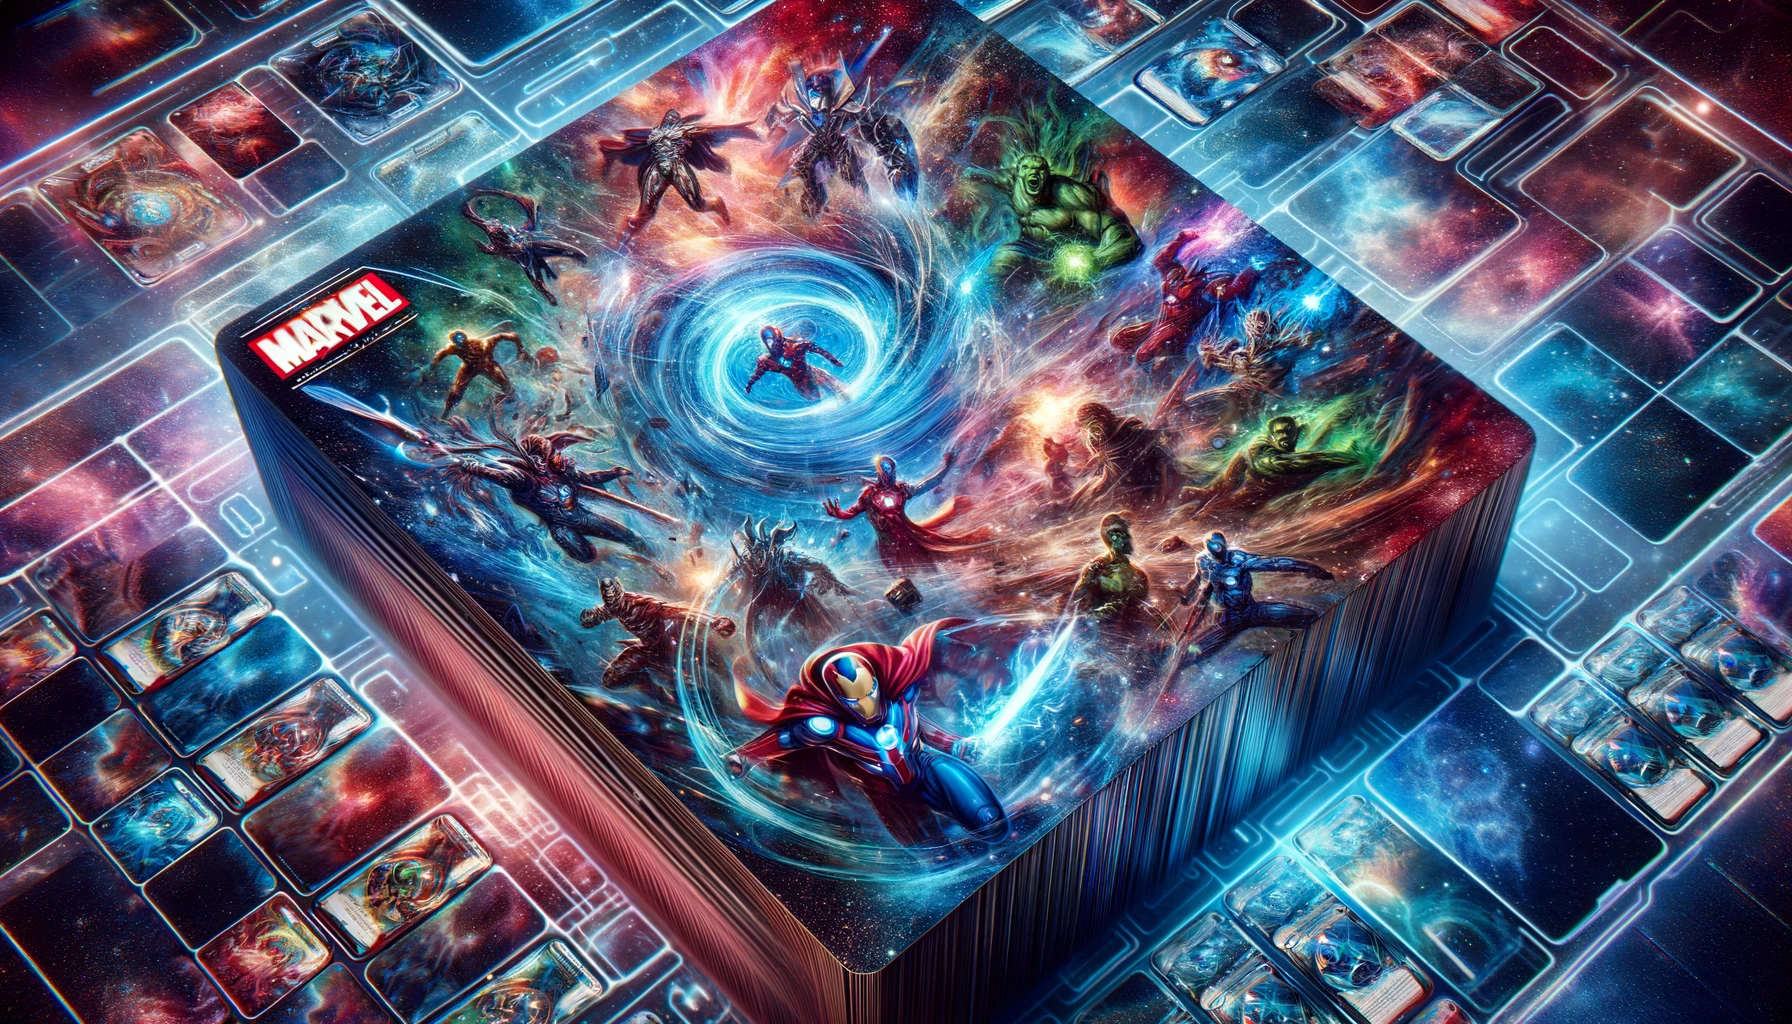 A scene depicting Marvel superheroes cards unleashing powers on a cosmic battlefield, emphasizing strategic gameplay.